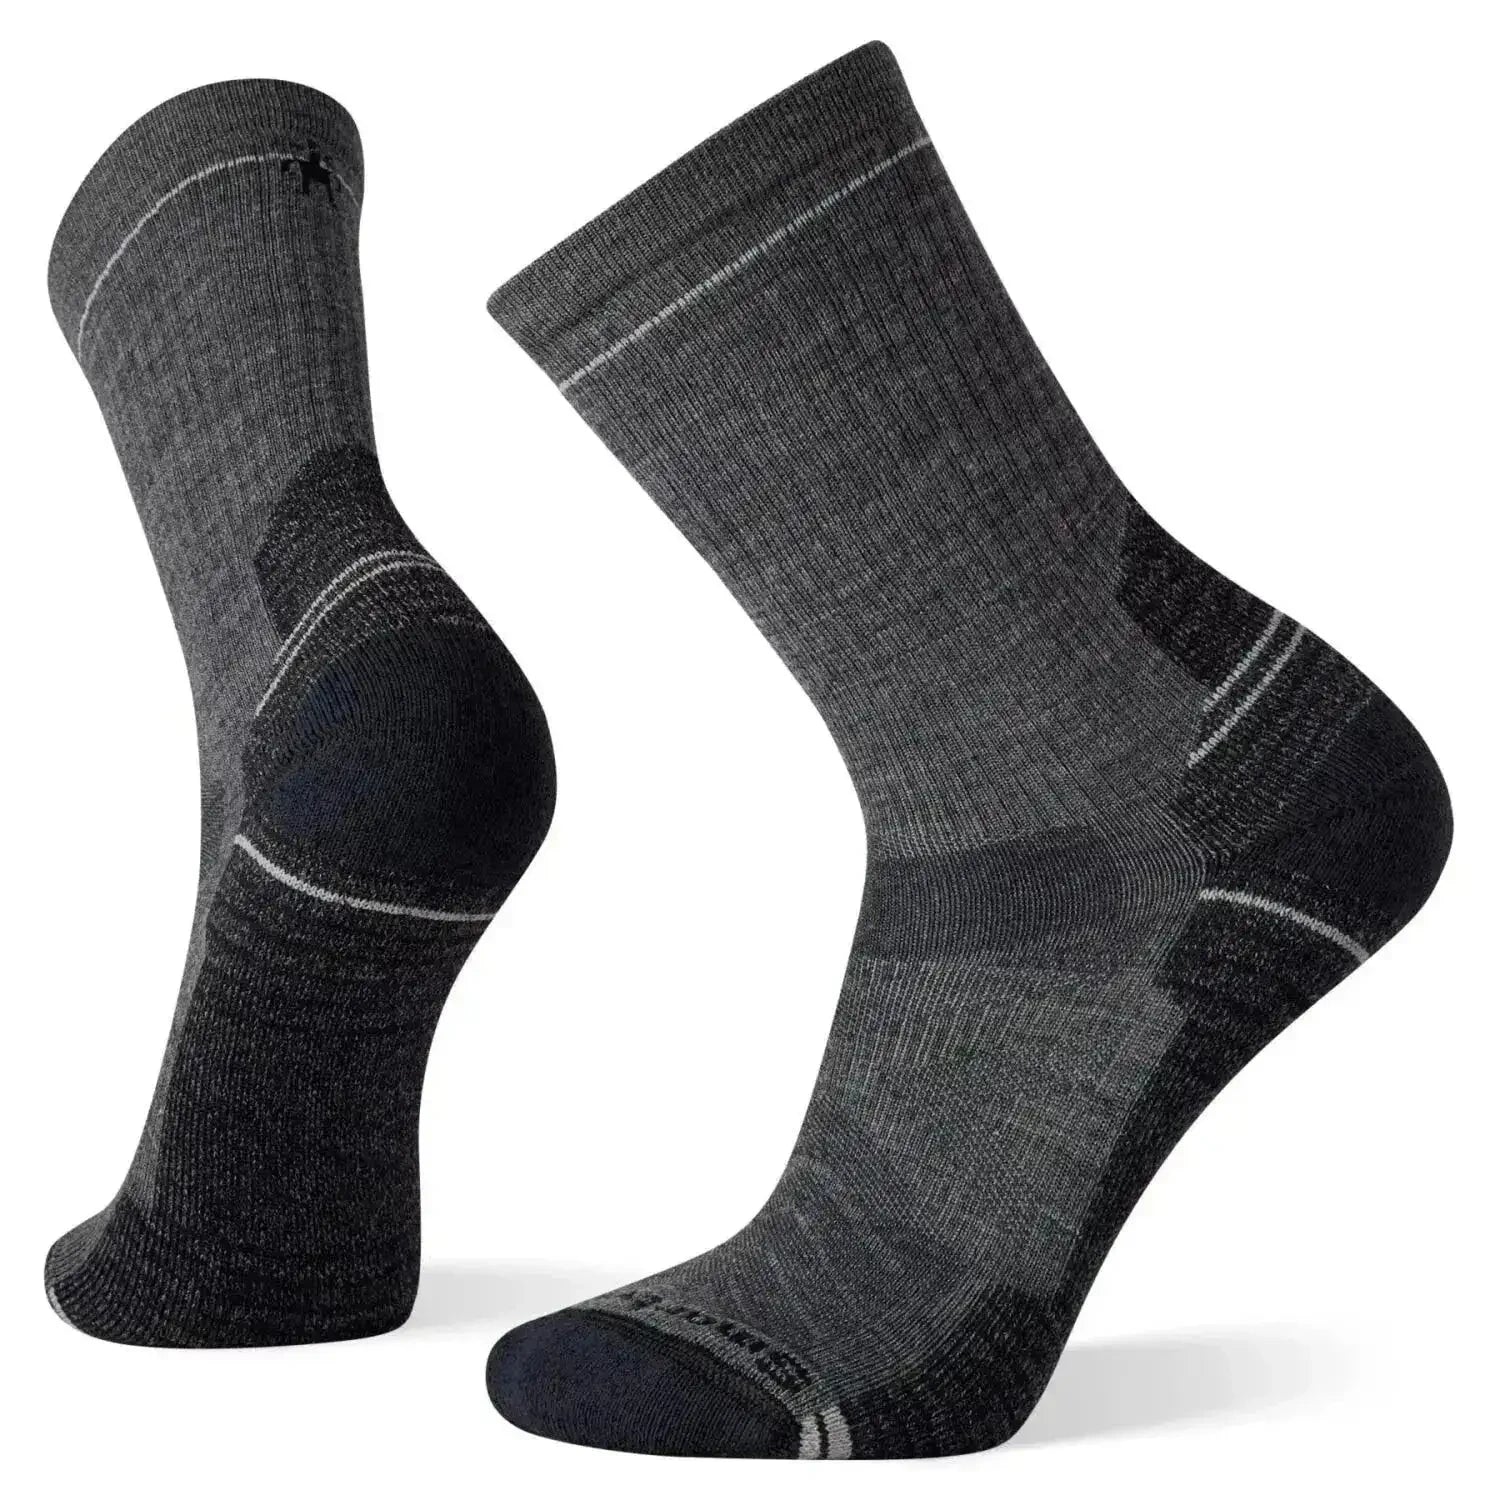 Smartwool Men's Hike Light Cushion Crew Socks shown in the Medium Gray color option